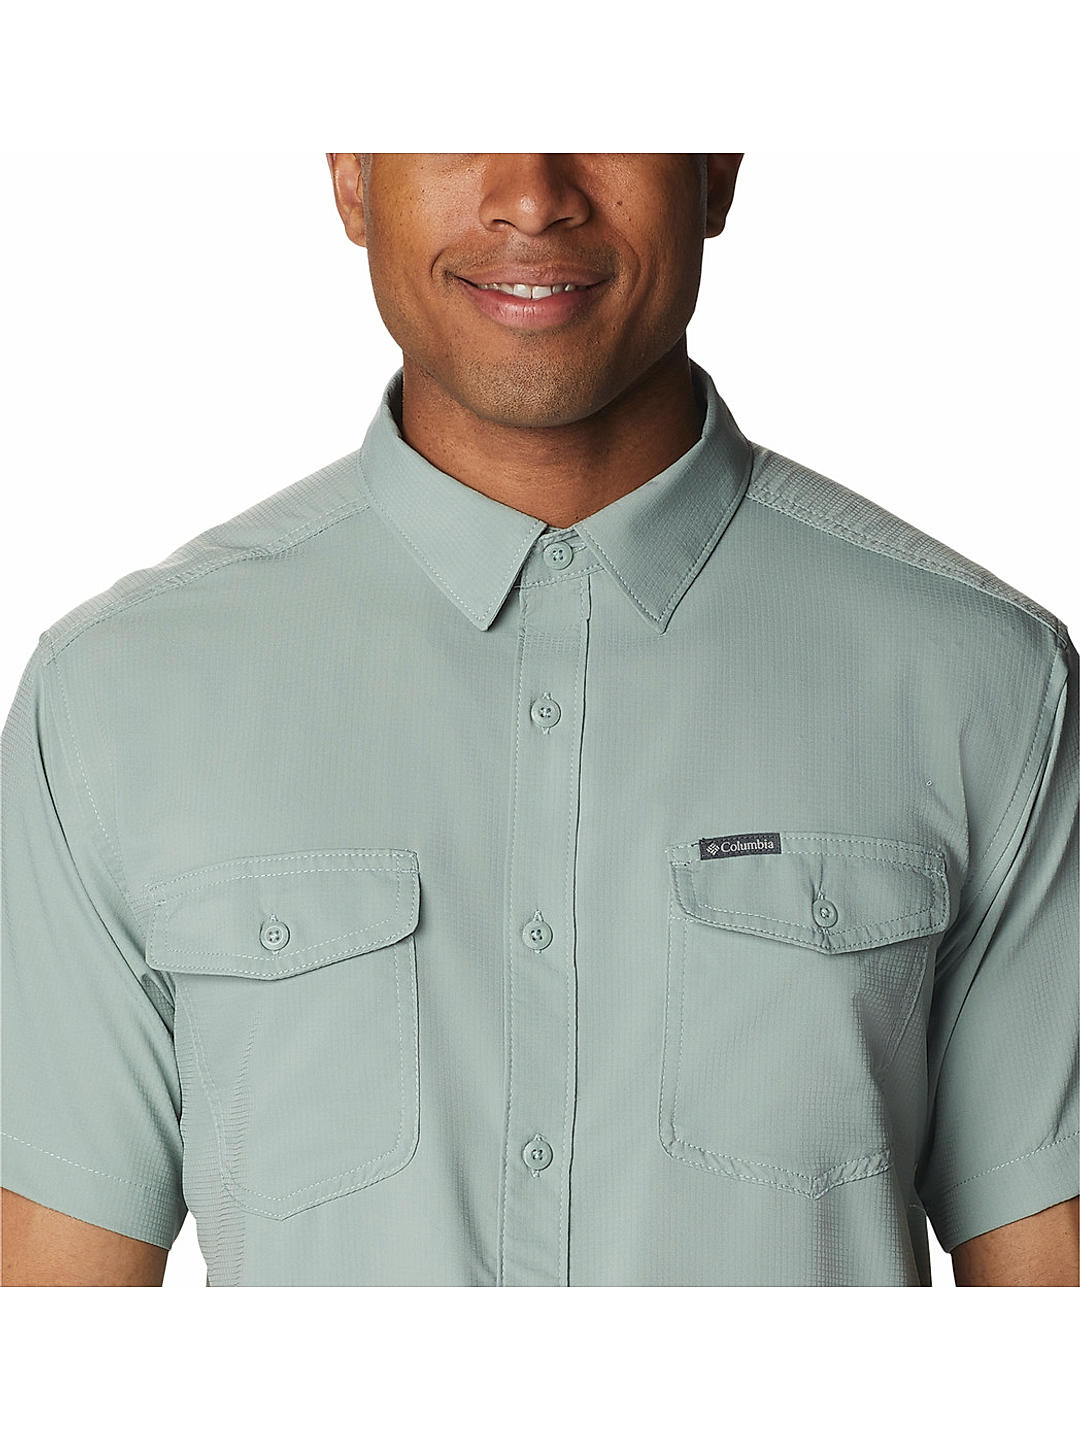 Columbia Men Green Utilizer II Solid Short Sleeve Shirt (Sun Protection)